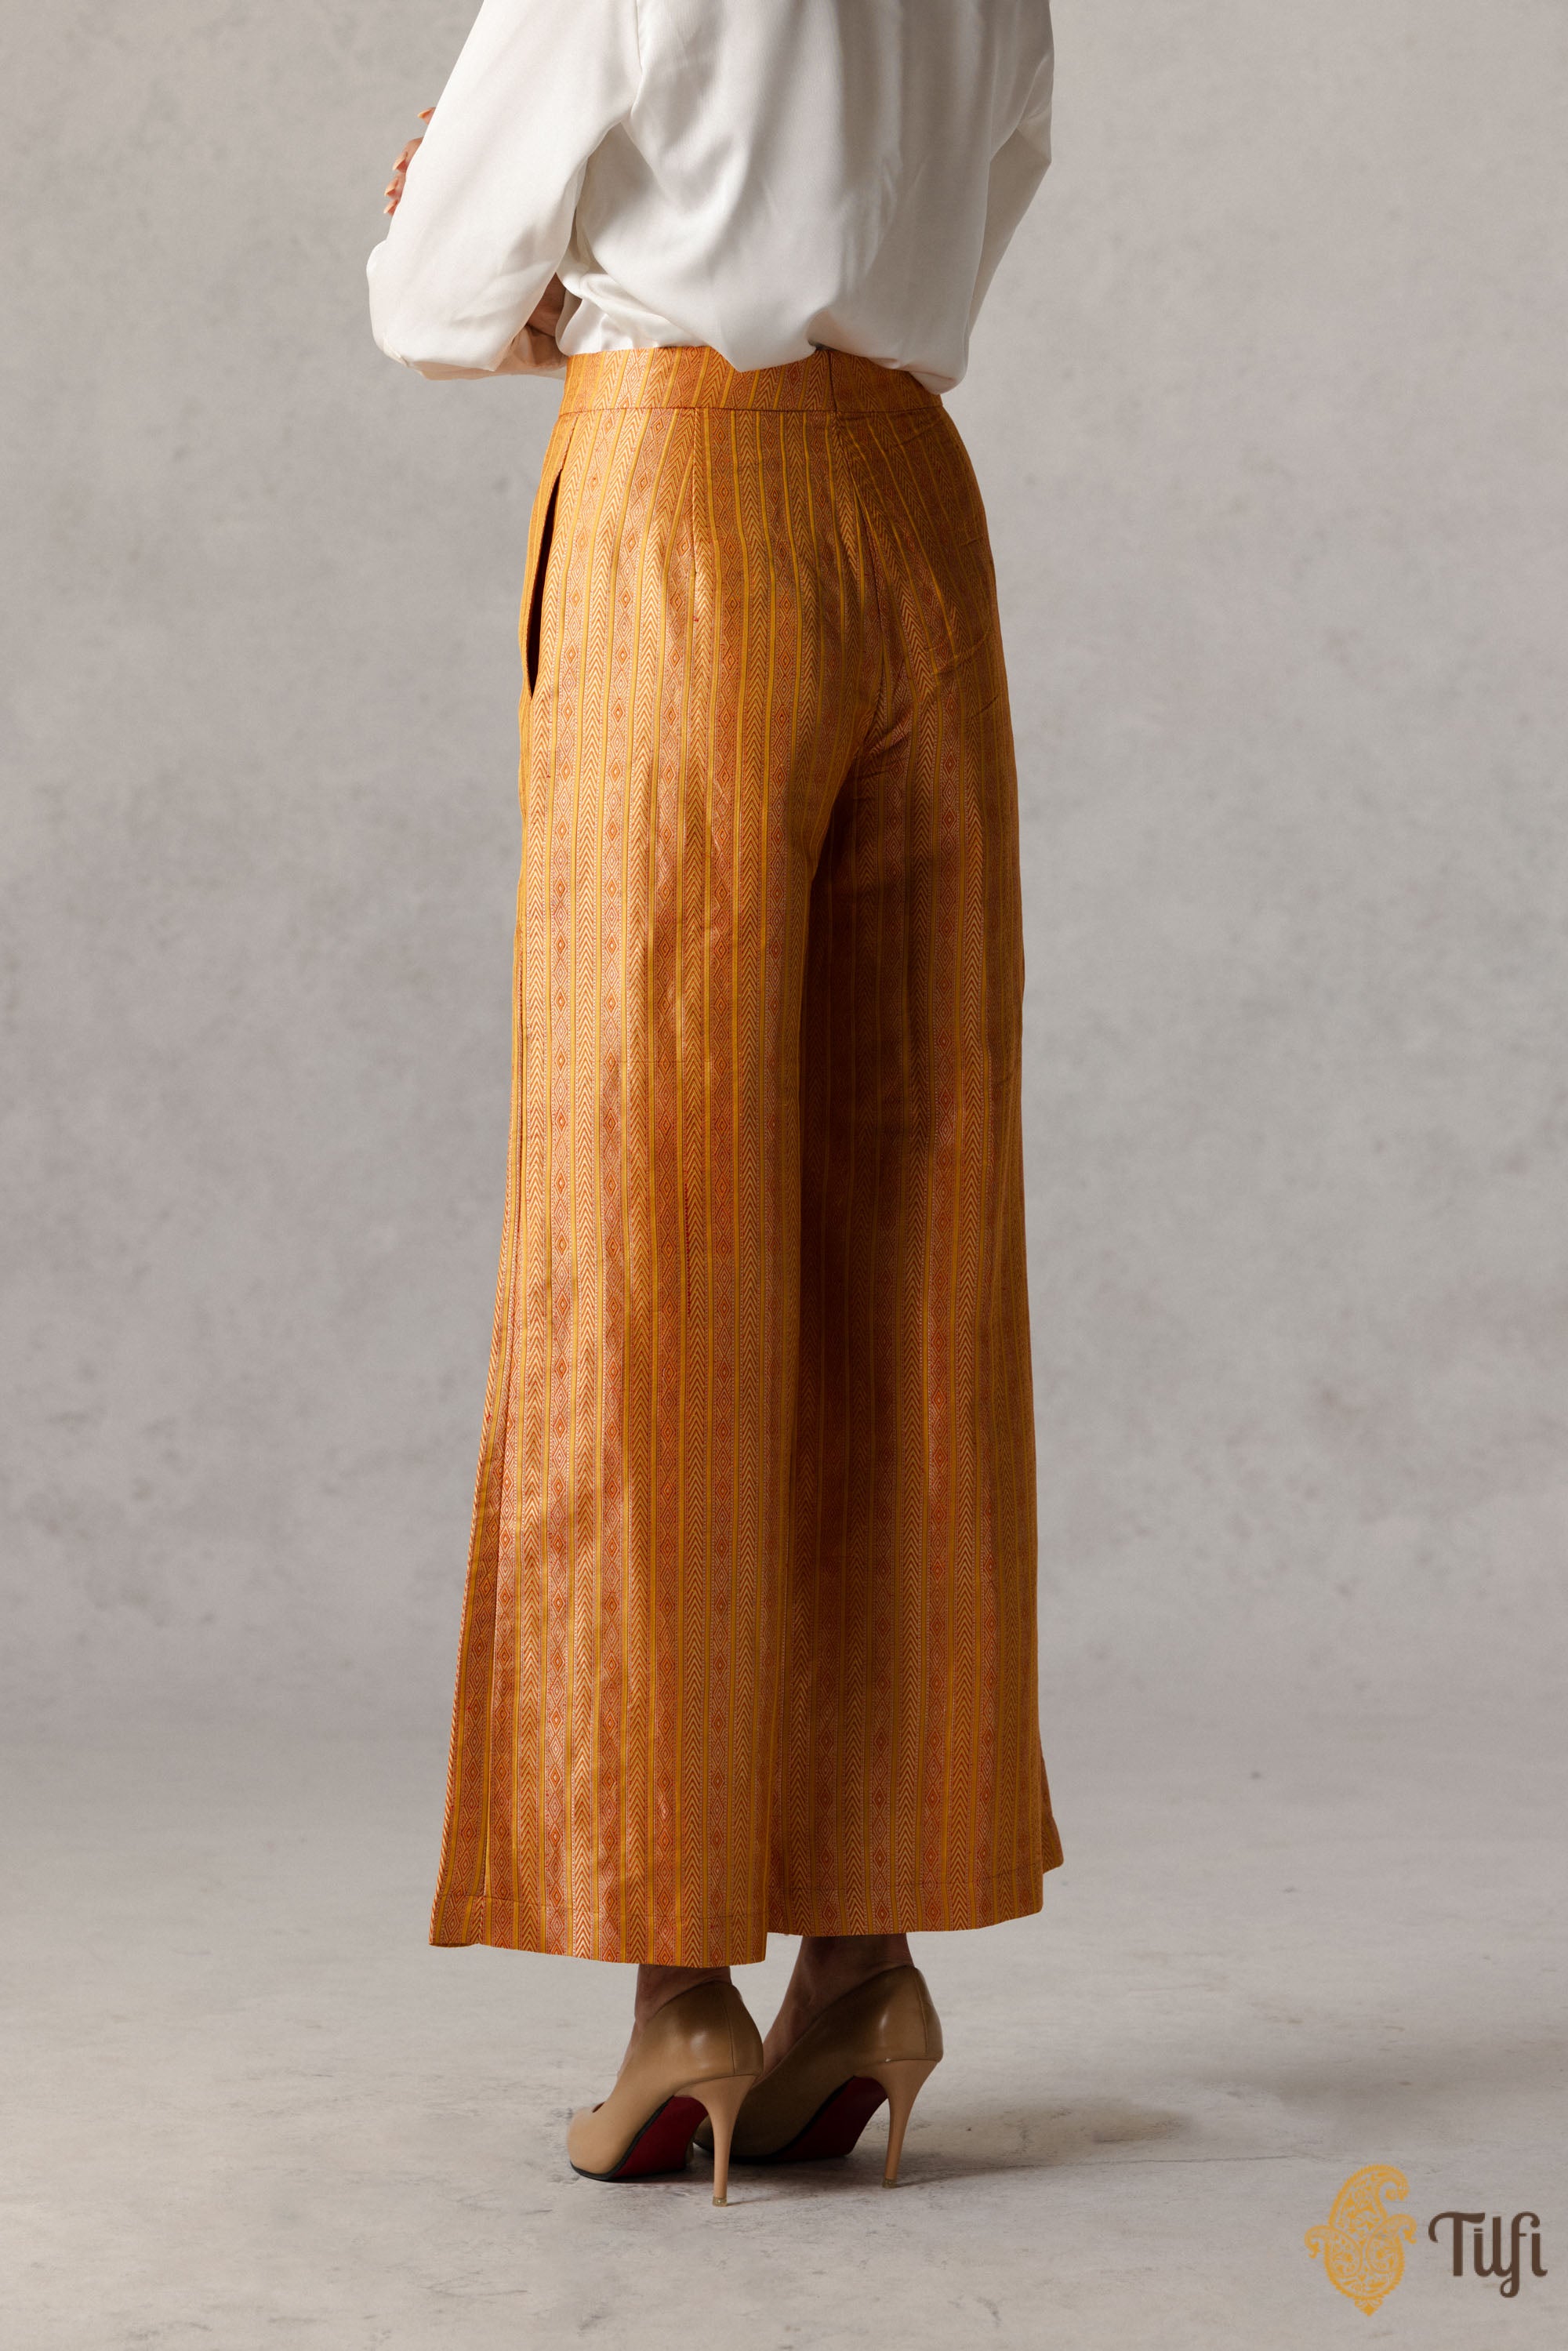 Shop Orange Handwoven Silk Pants for Women Online from India's